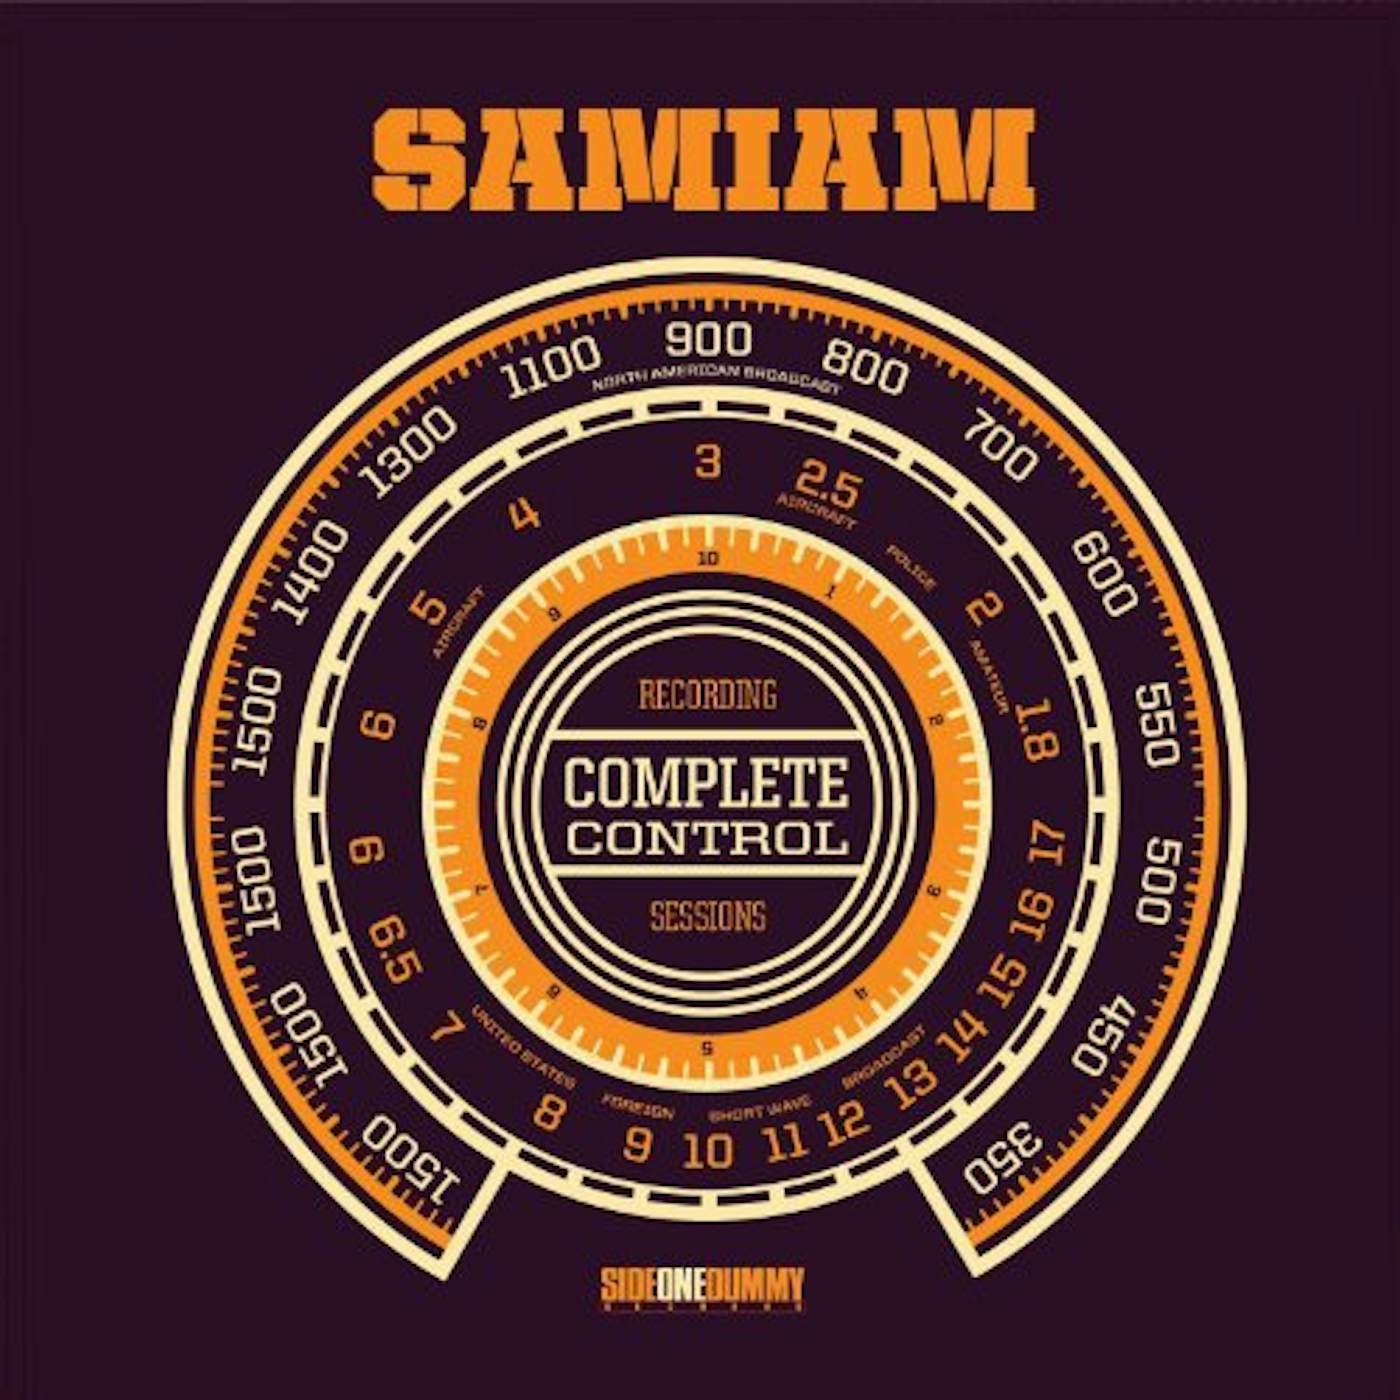 Samiam Complete Control Sessions Vinyl Record